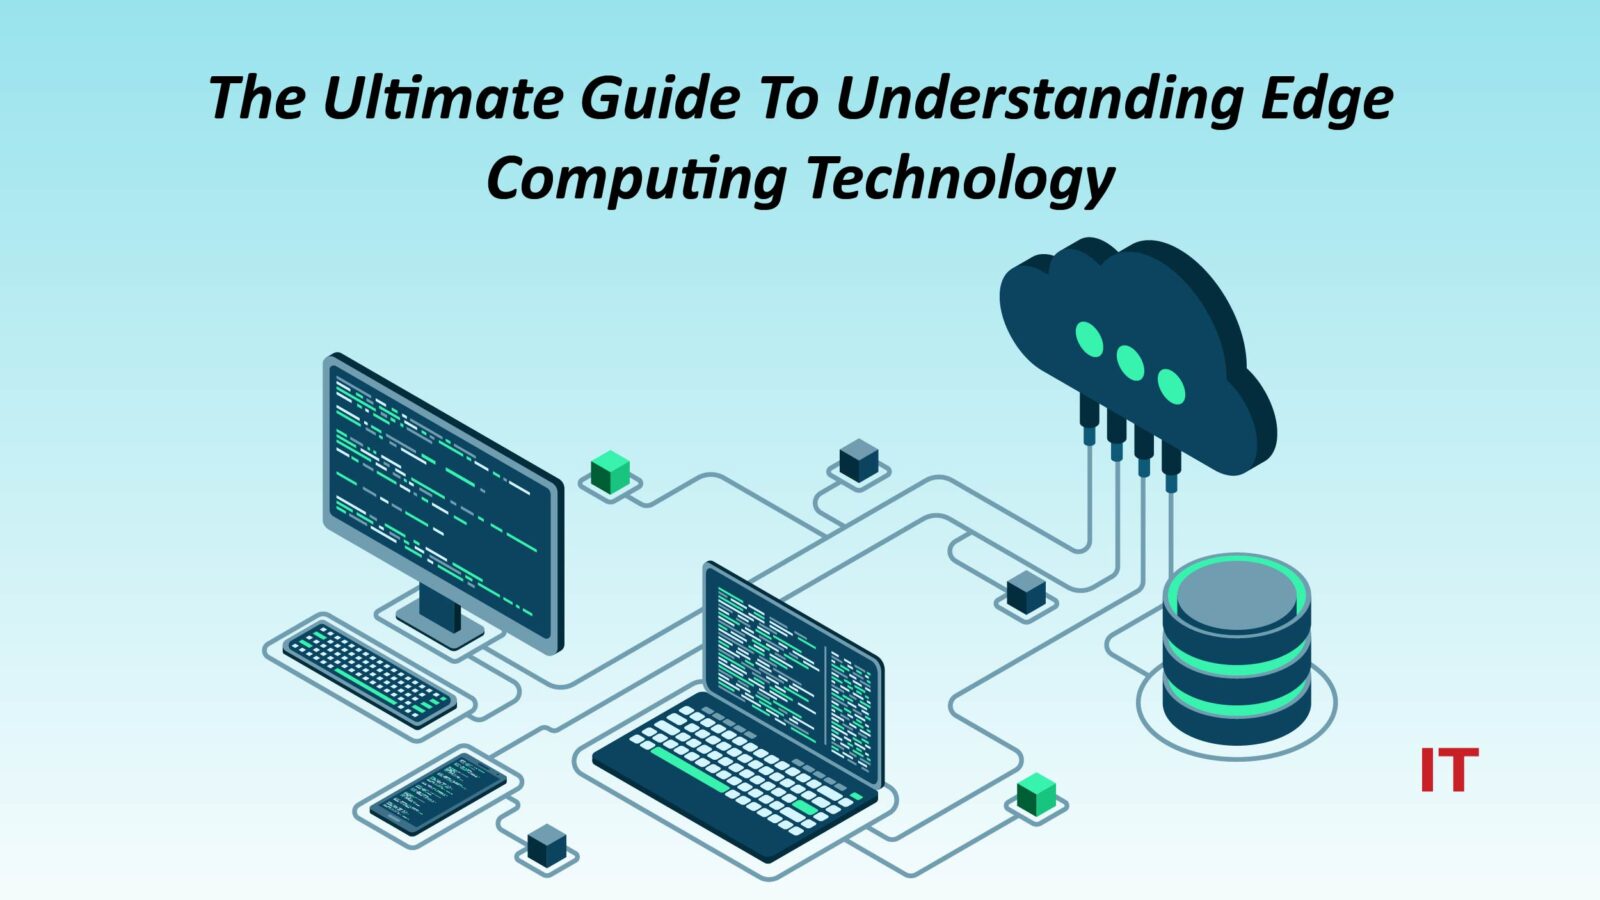 Edge Computing Technology